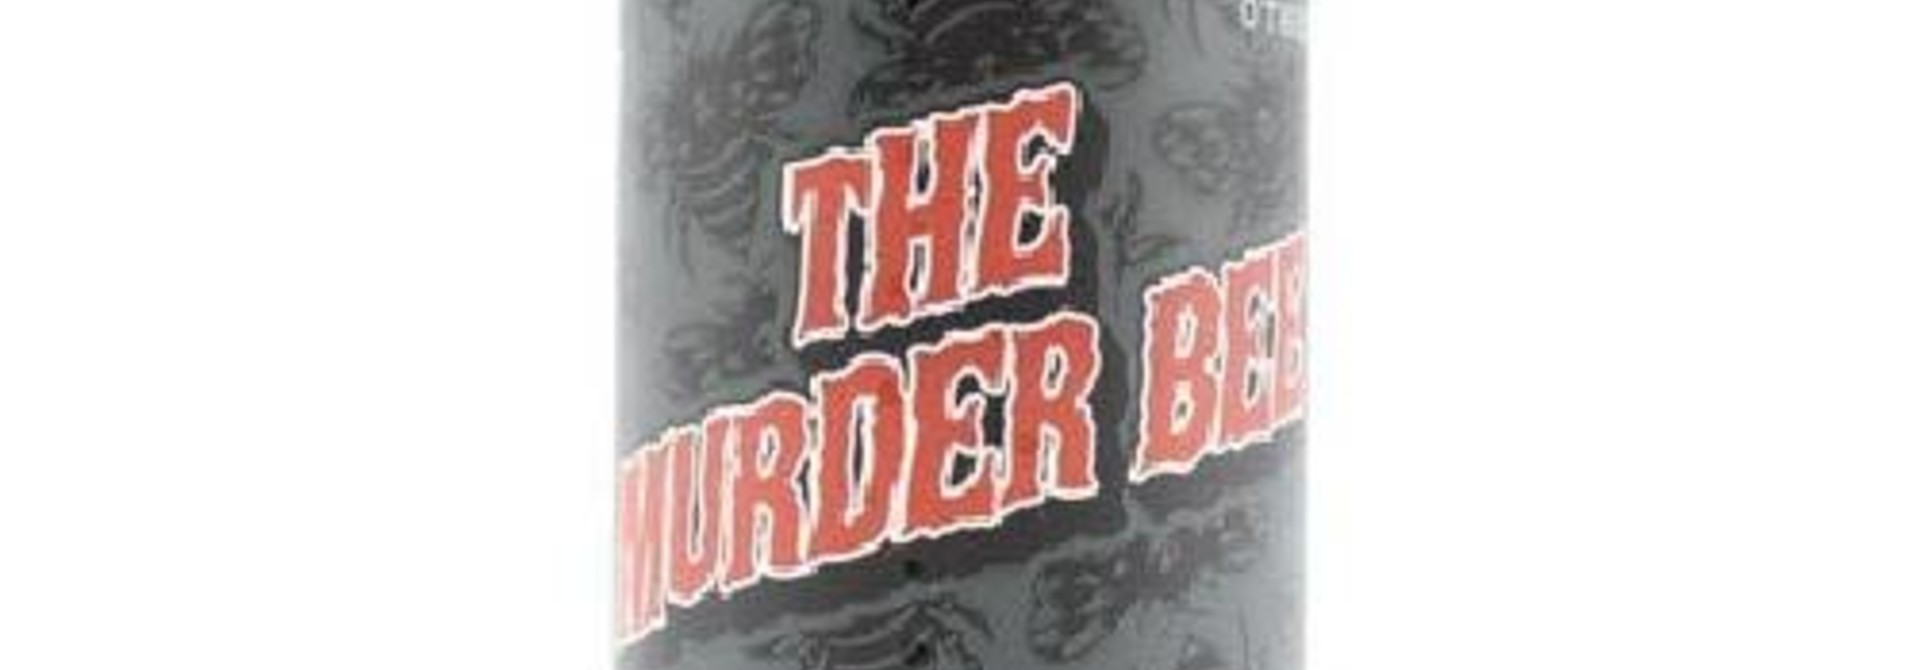 BURLEY OAK / OTHER HALF THE MURDER BEE 48CL